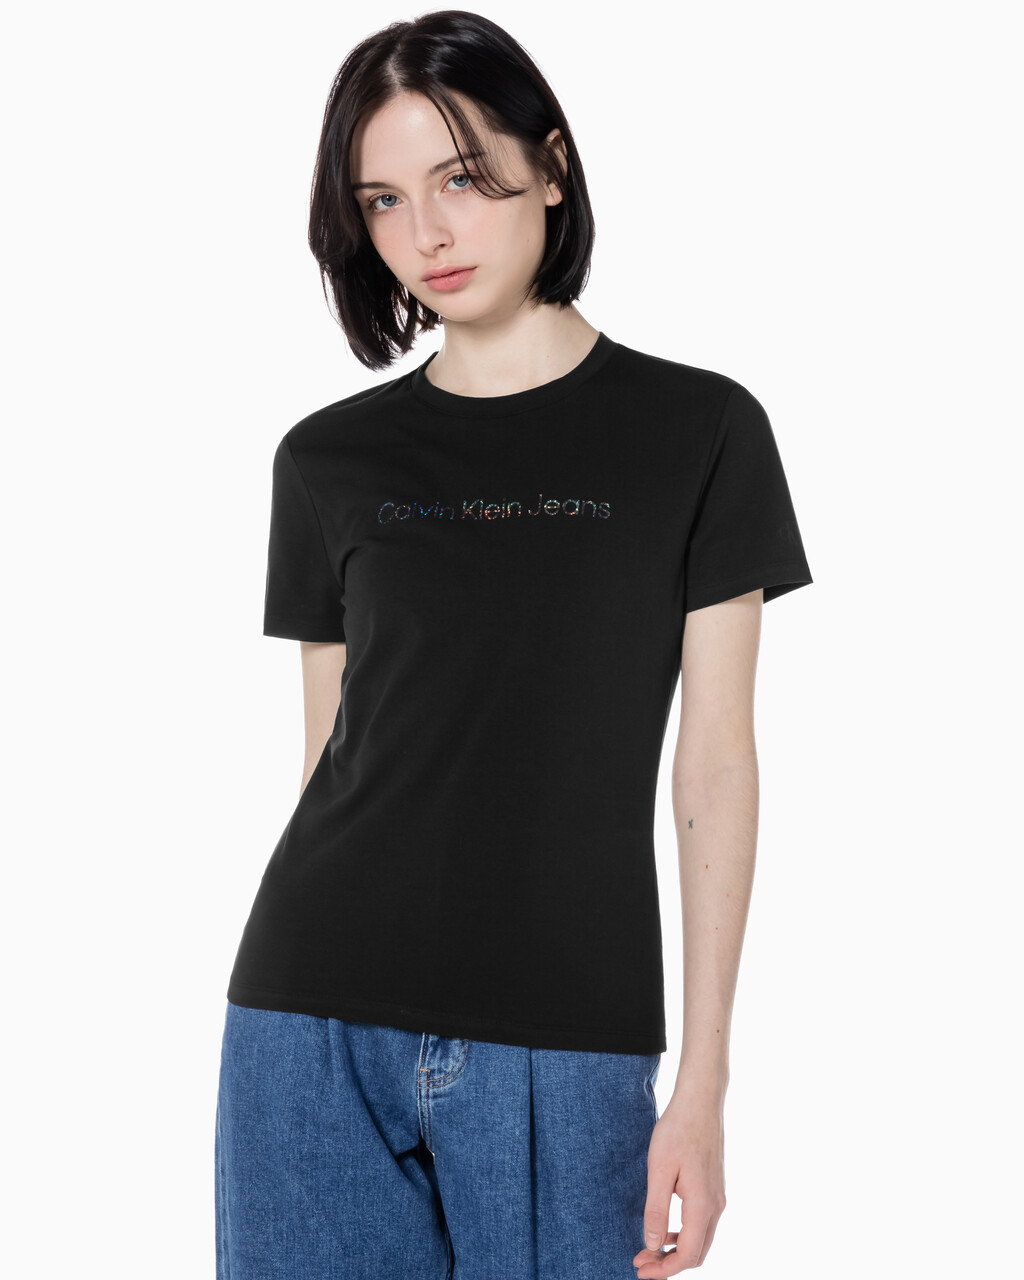 Buy 여성 슬림핏 인스티튜셔널 로고 반팔 티셔츠 in color CK BLACK